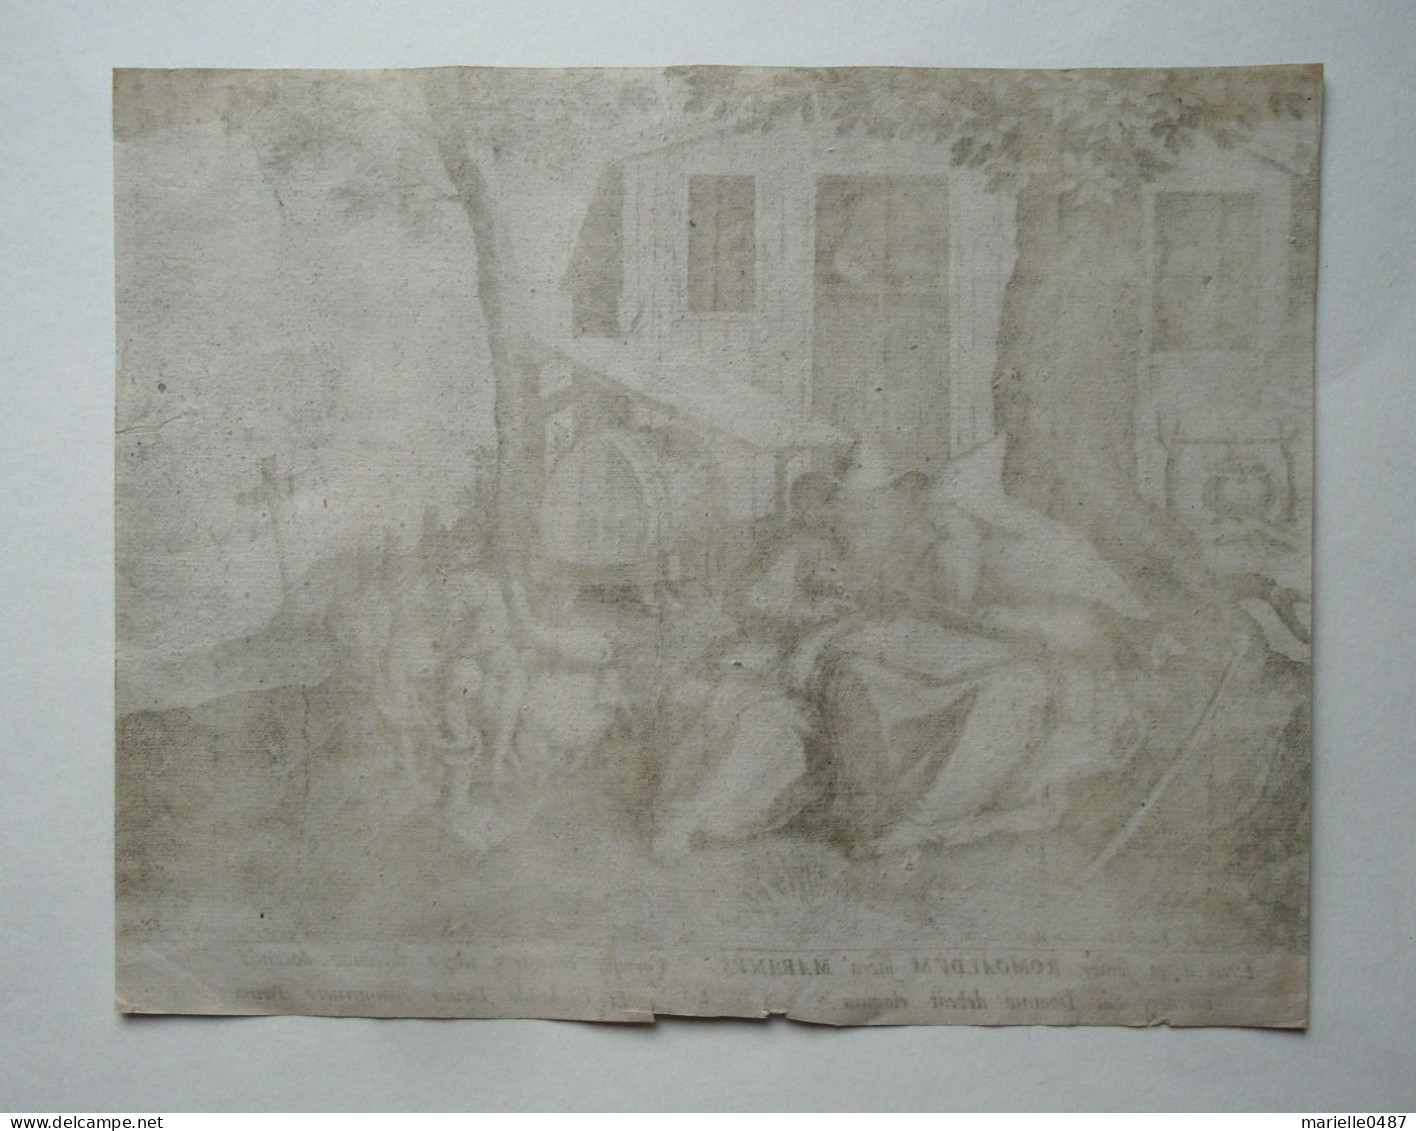 Martin De VOs - Sadeler - 1598 - Trophaeum Vitae Solitariae - Prints & Engravings